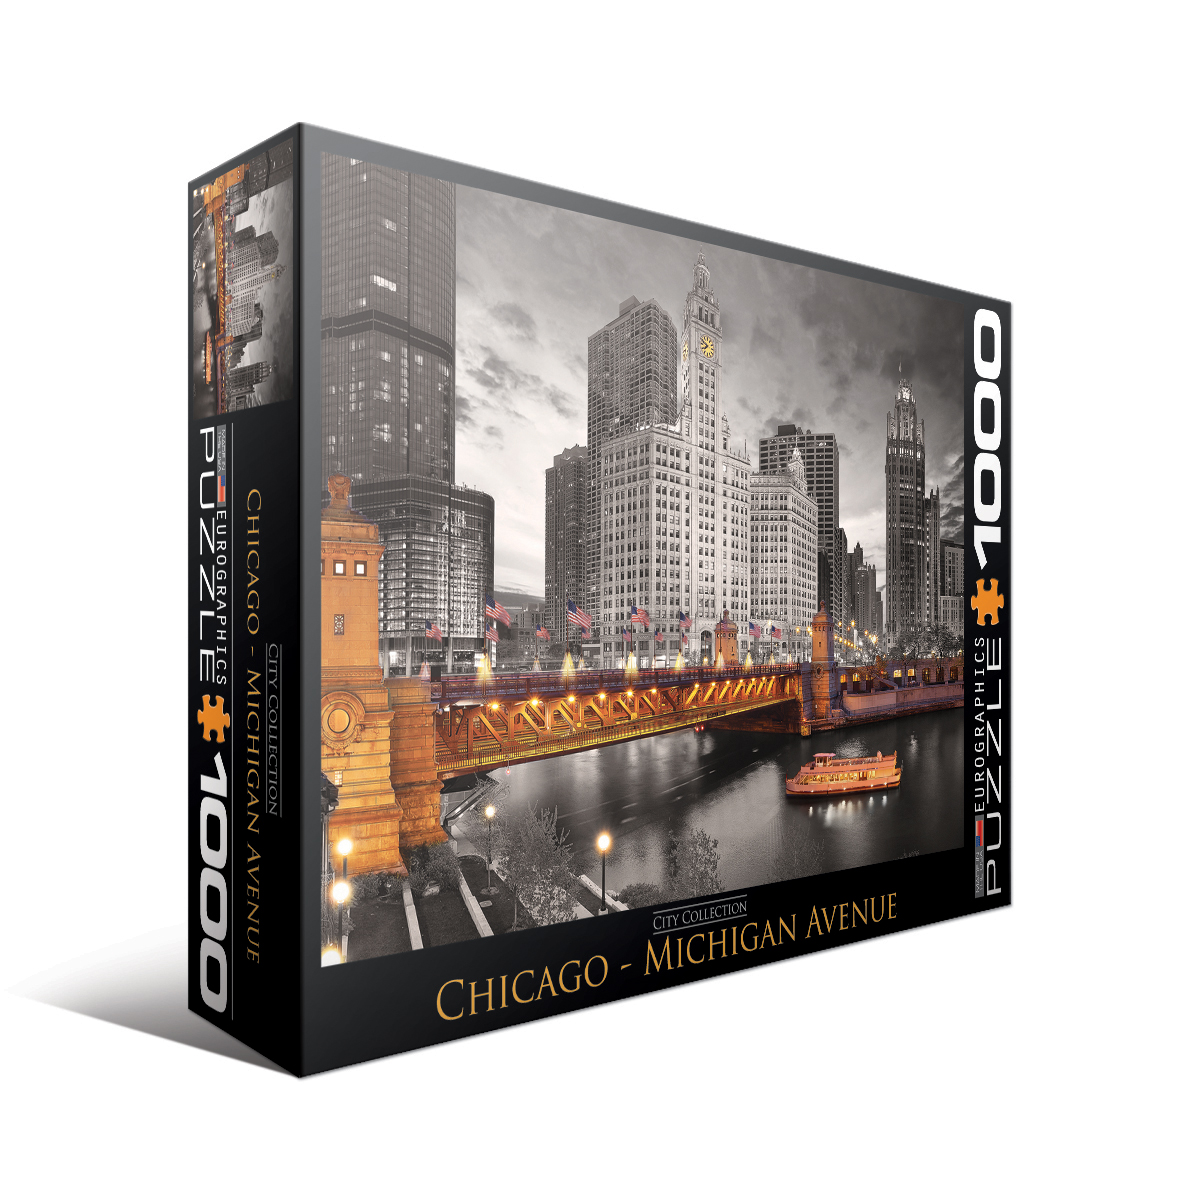 EuroPuzzles City Collection - Chicago - Michigan Avenue: 1000 Pcs